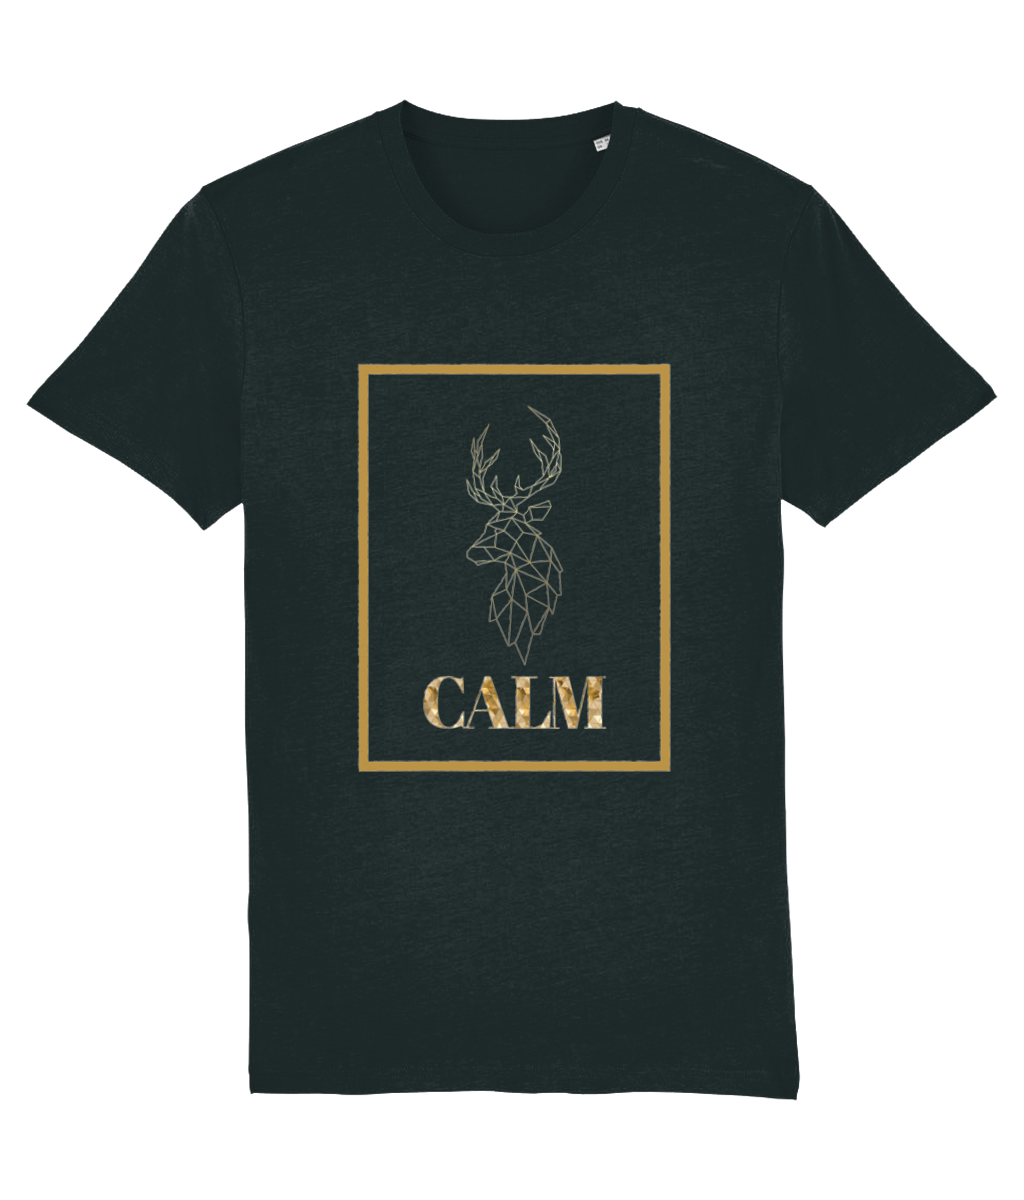 Calm - T-shirt